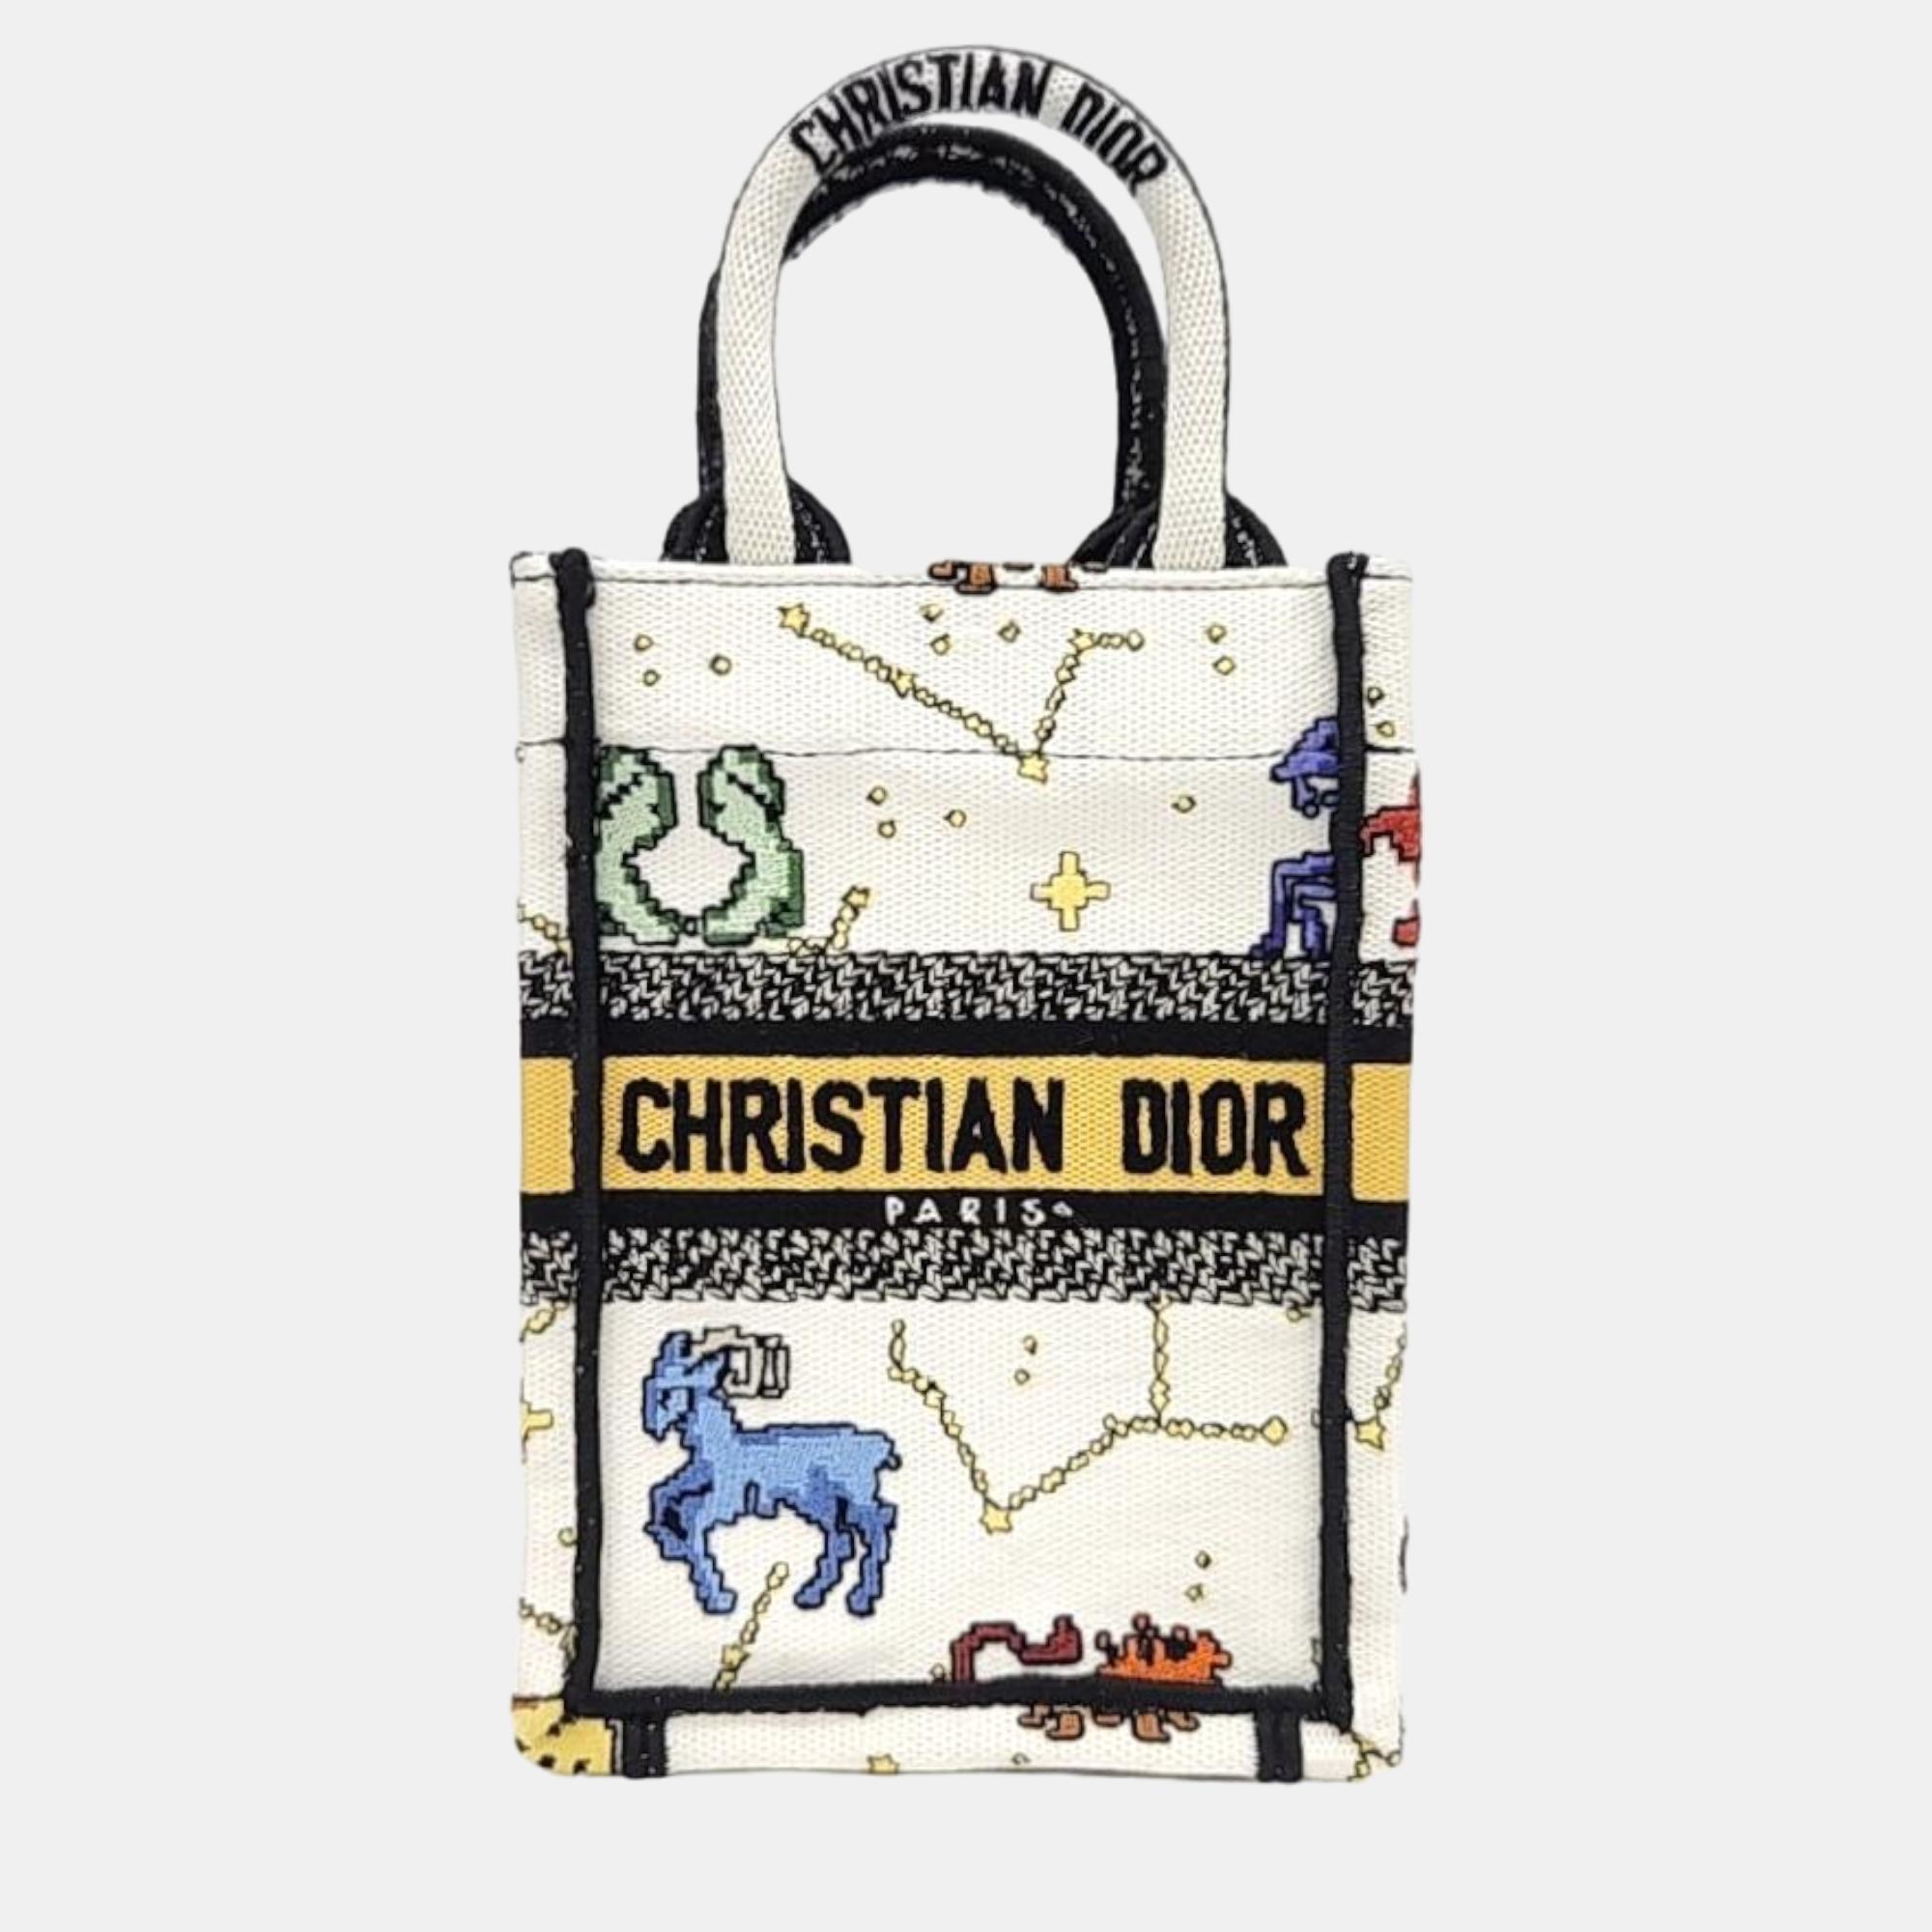 Christian dior book tote mini phone bag